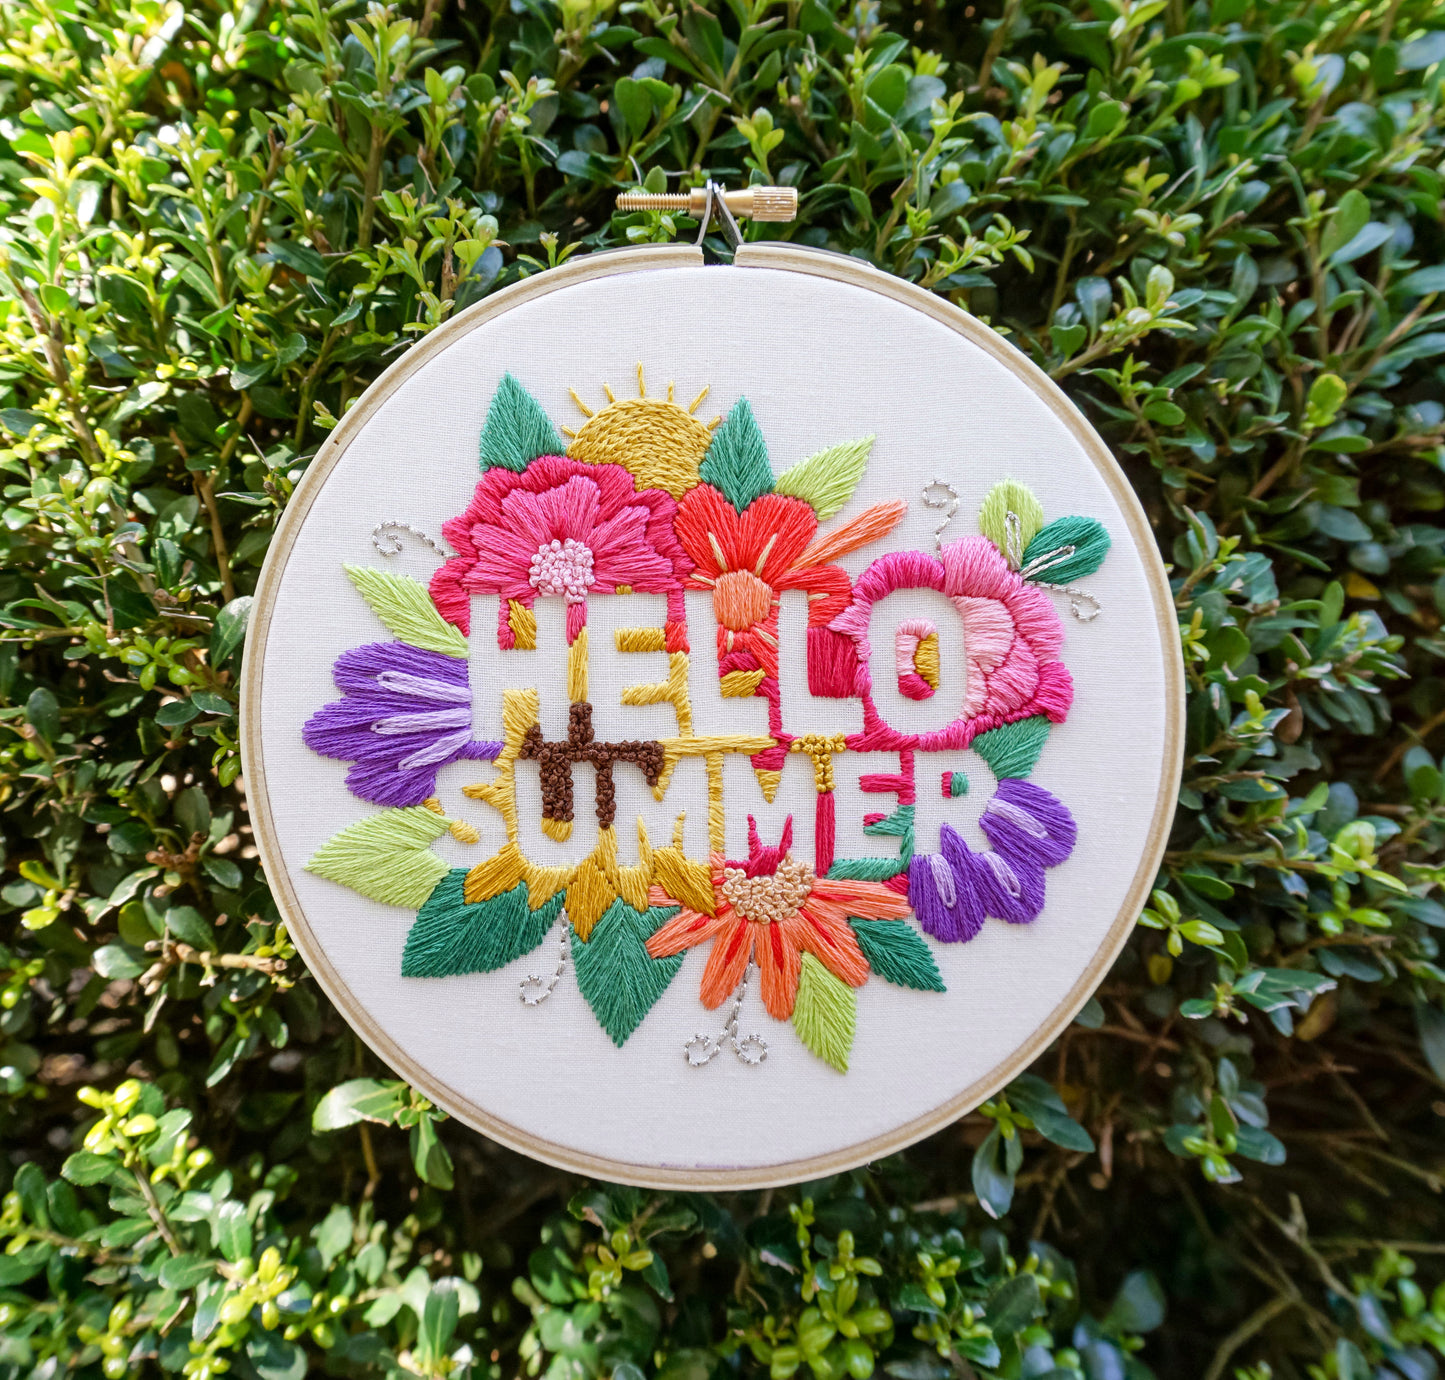 PDF Pattern - Hello Summer, Advanced Embroidery Pattern